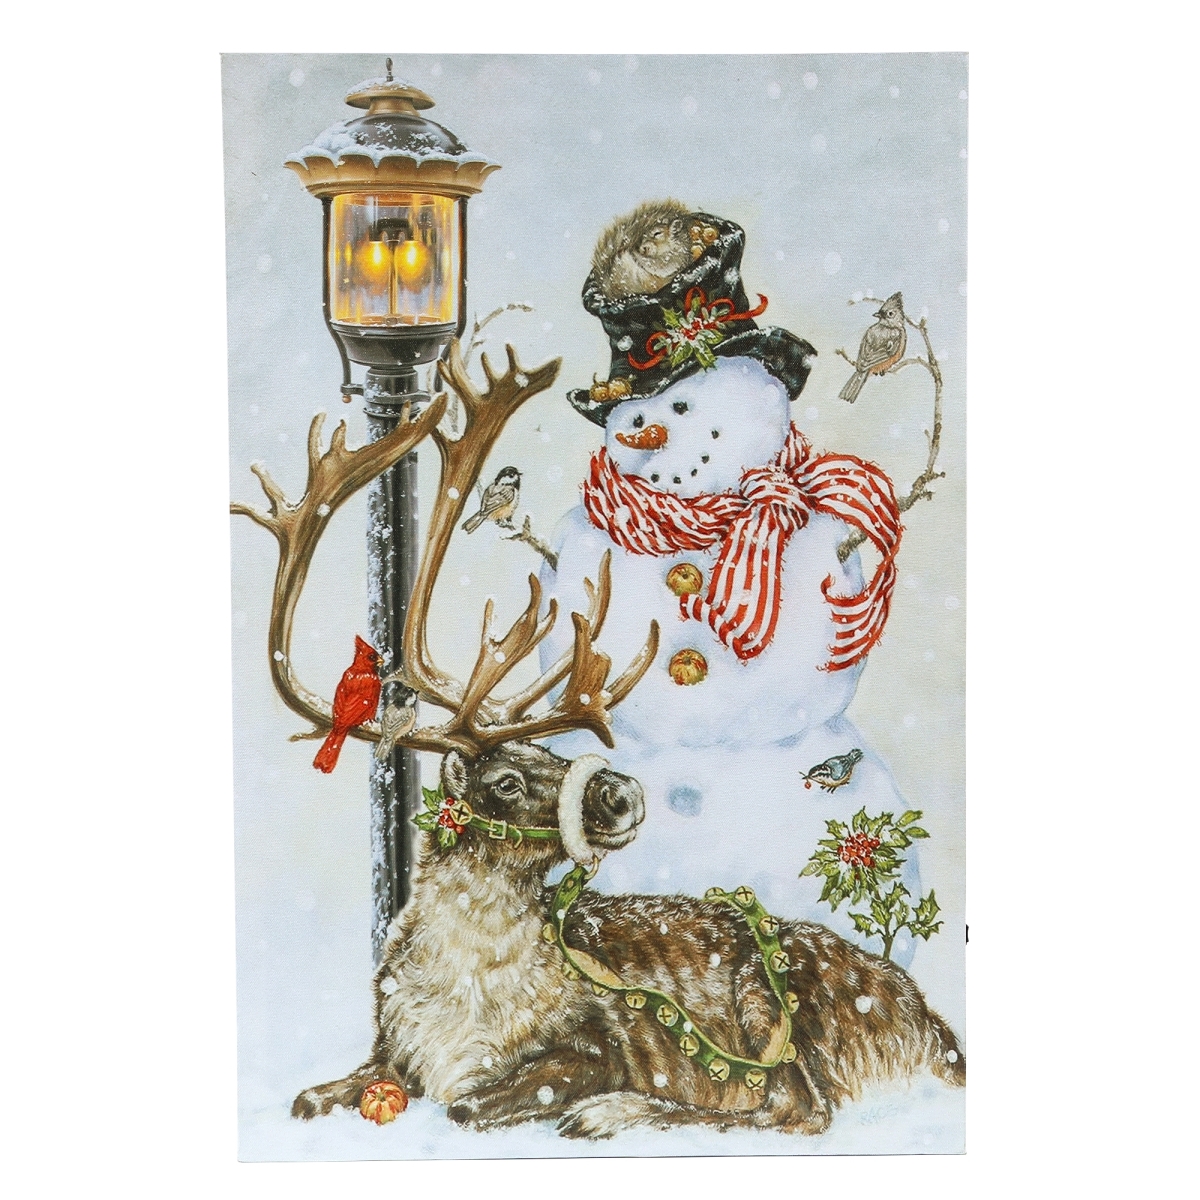 Wha657 Winter Wonderland Snowman & Reindeer Canvas Print Wall Art With Led Lights